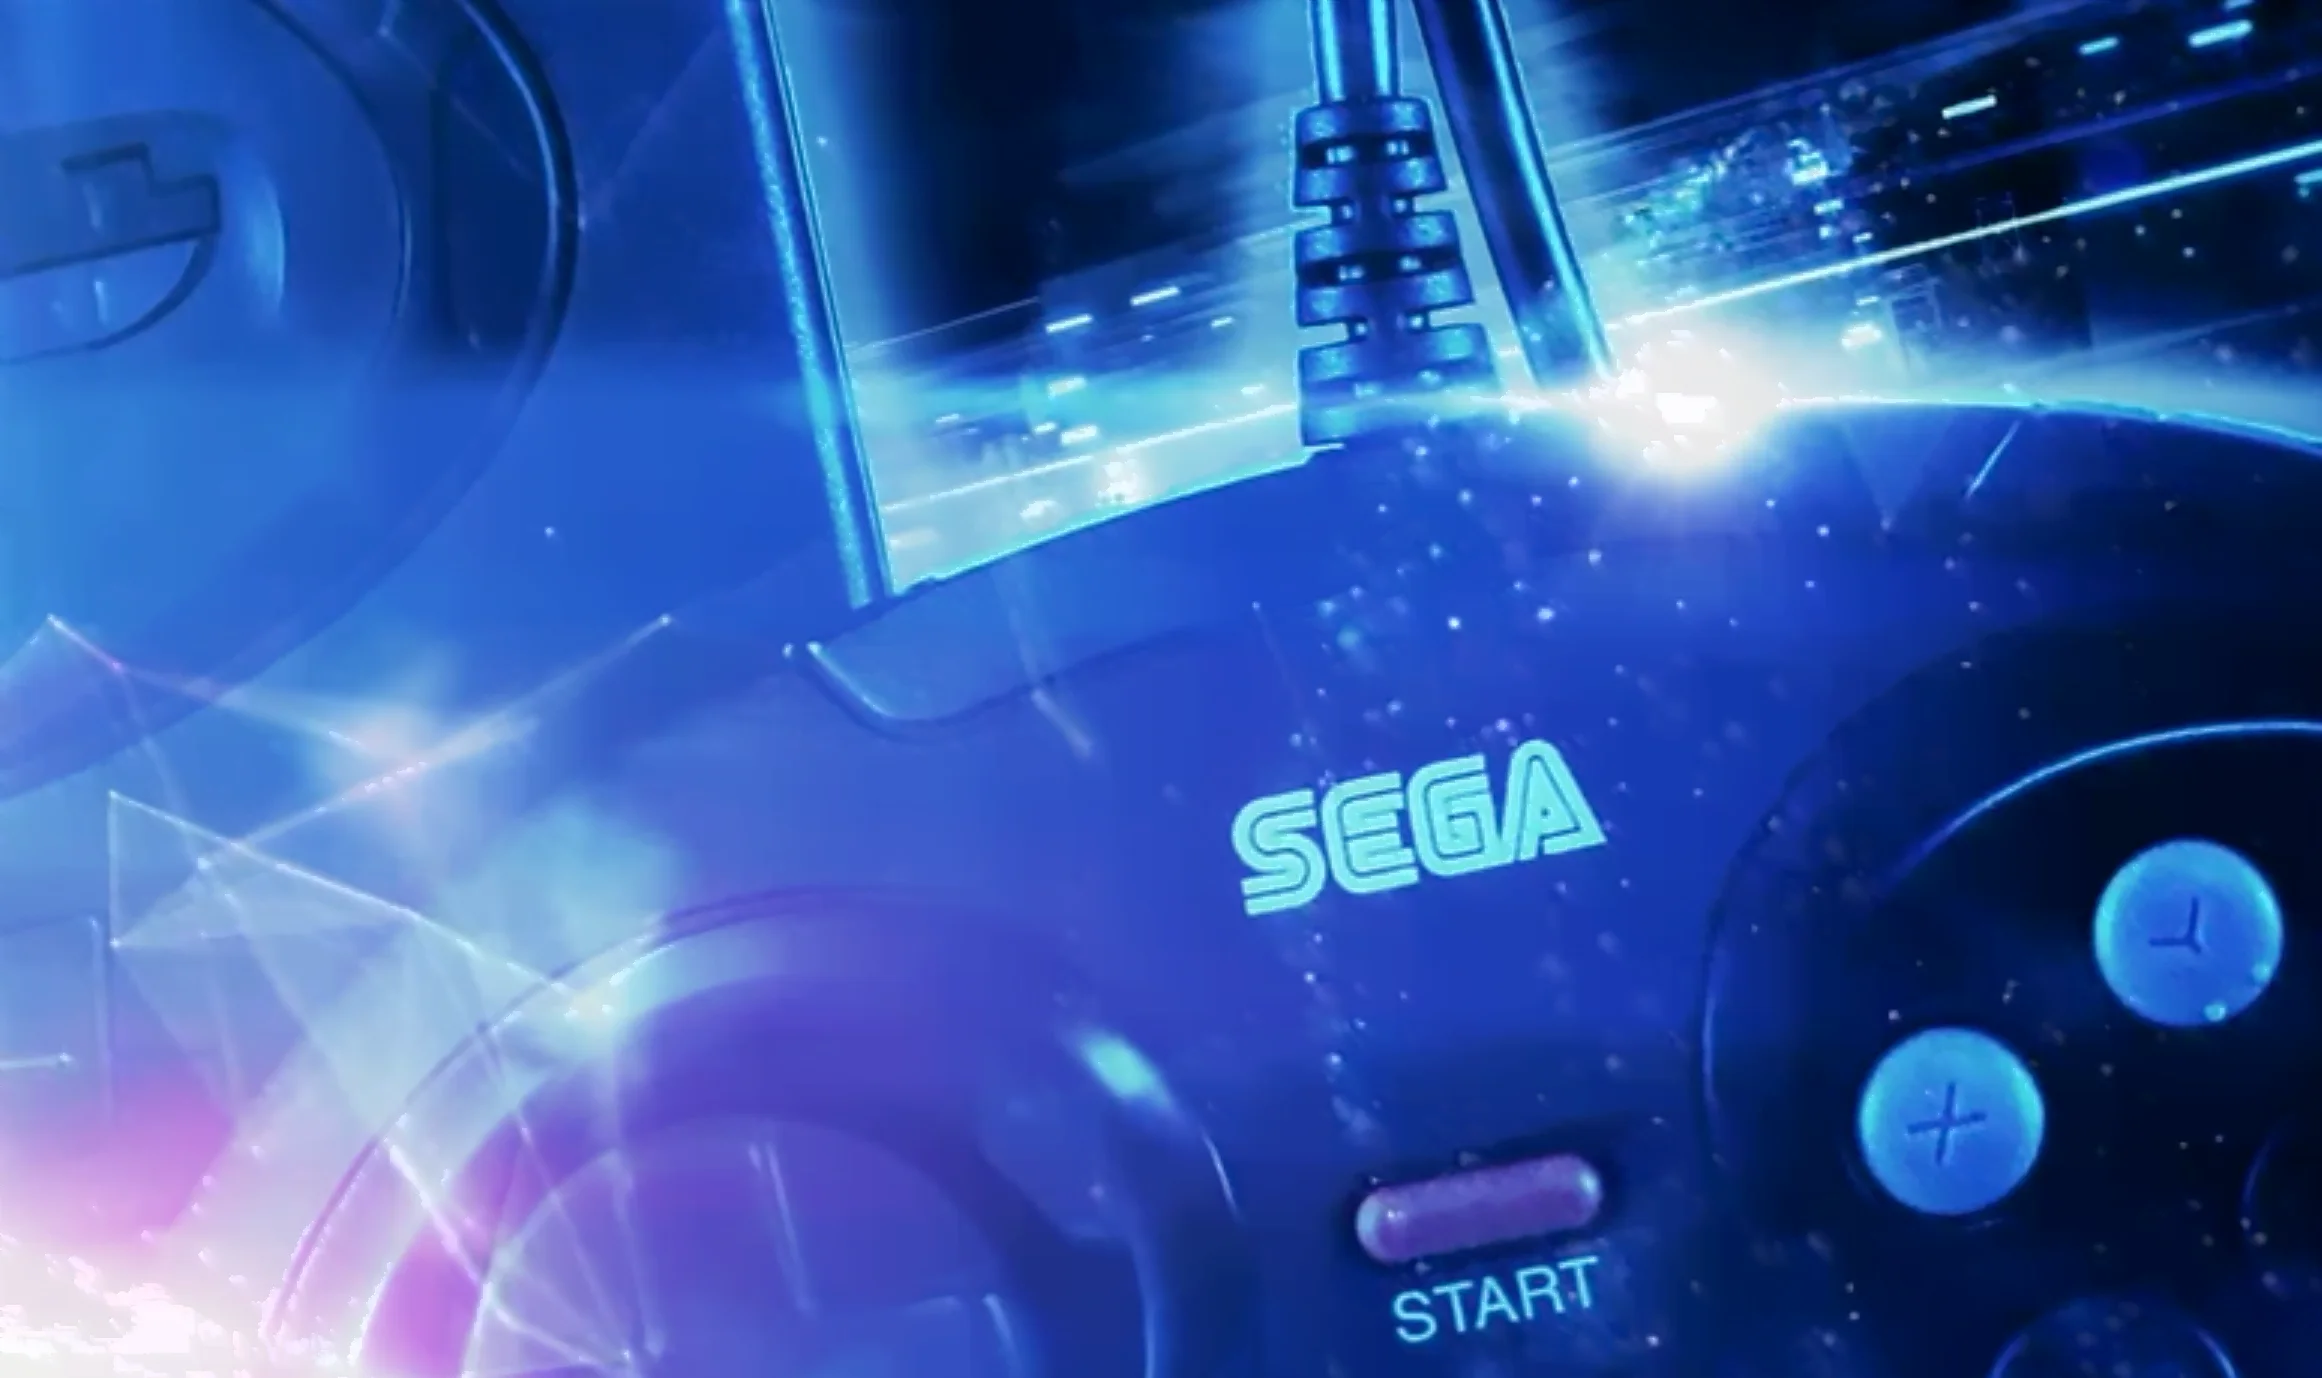 Sega Mega Drive 2 lanceres til oktober (Foto: Sega - video fra YouTube)